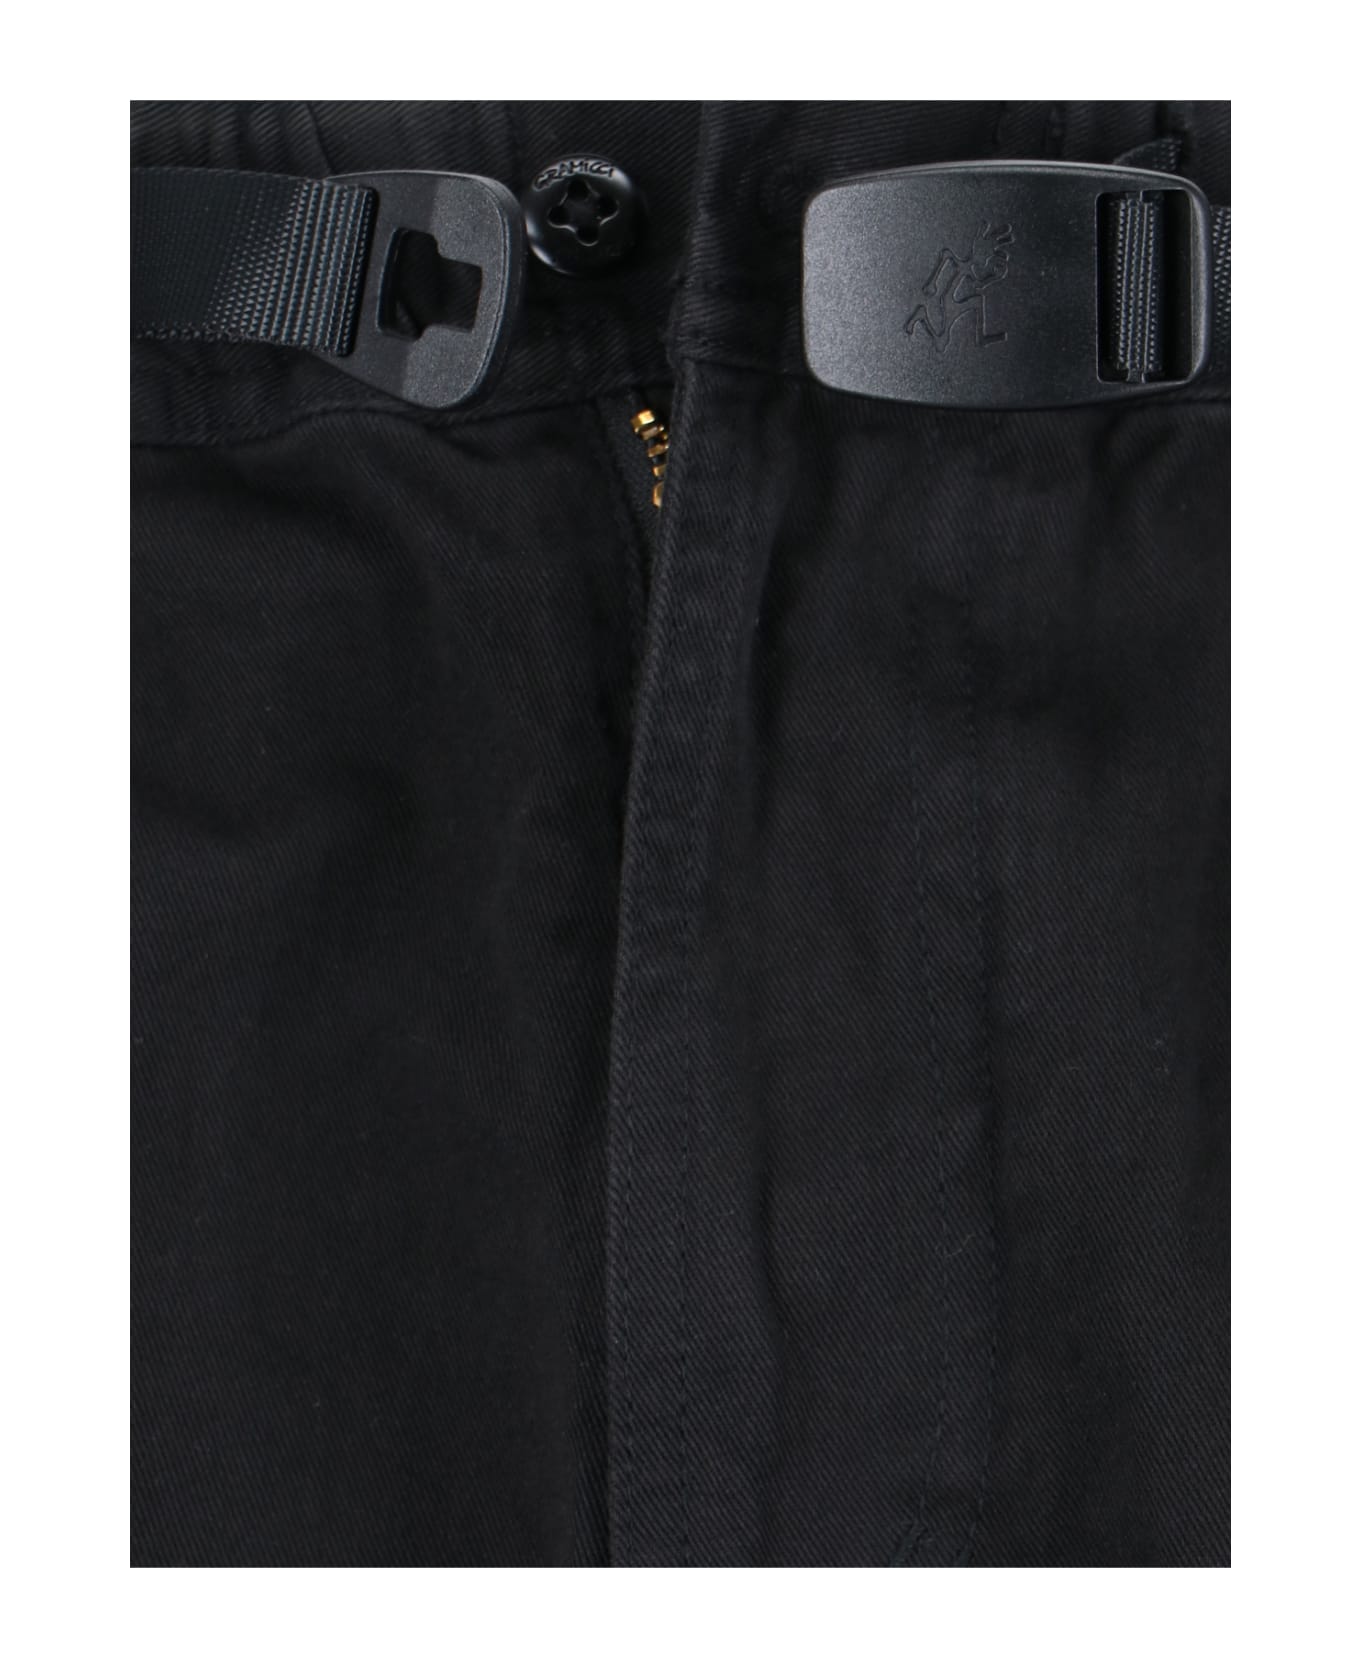 Gramicci 'gadget' Shorts - Black   ショートパンツ